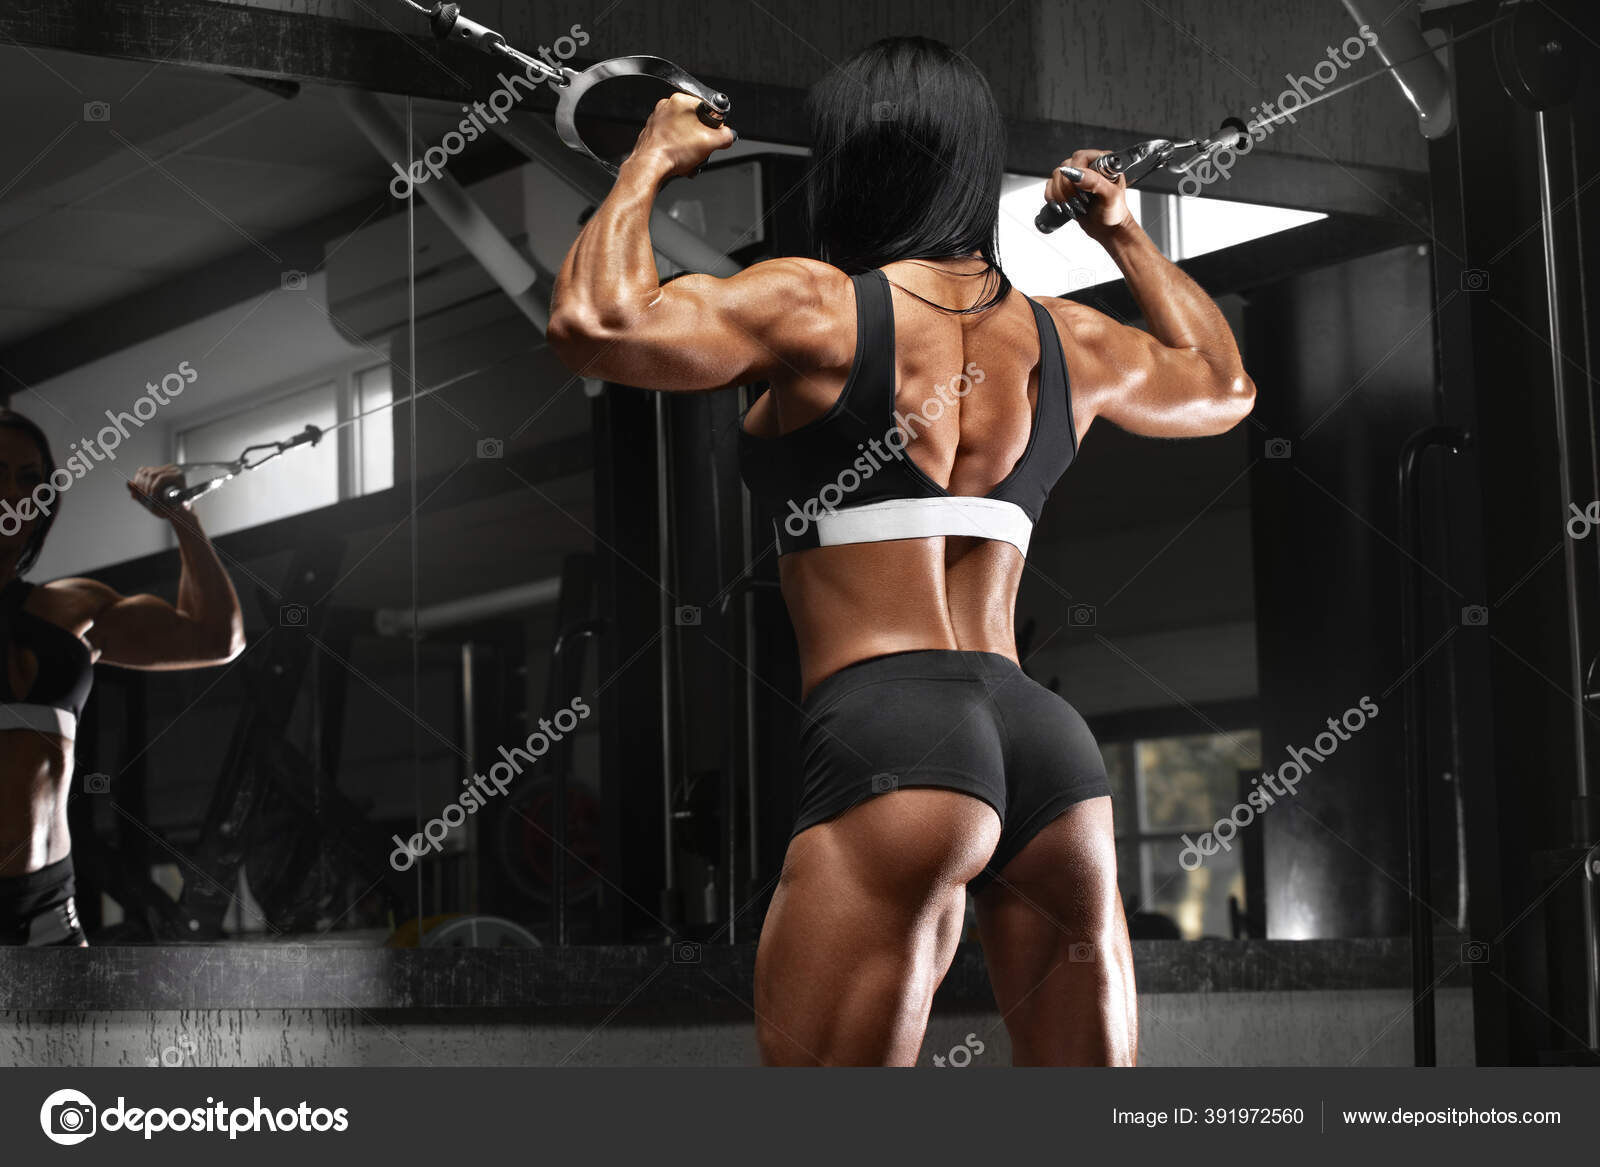 https://st4.depositphotos.com/3383955/39197/i/1600/depositphotos_391972560-stock-photo-muscular-woman-gym-showing-back.jpg